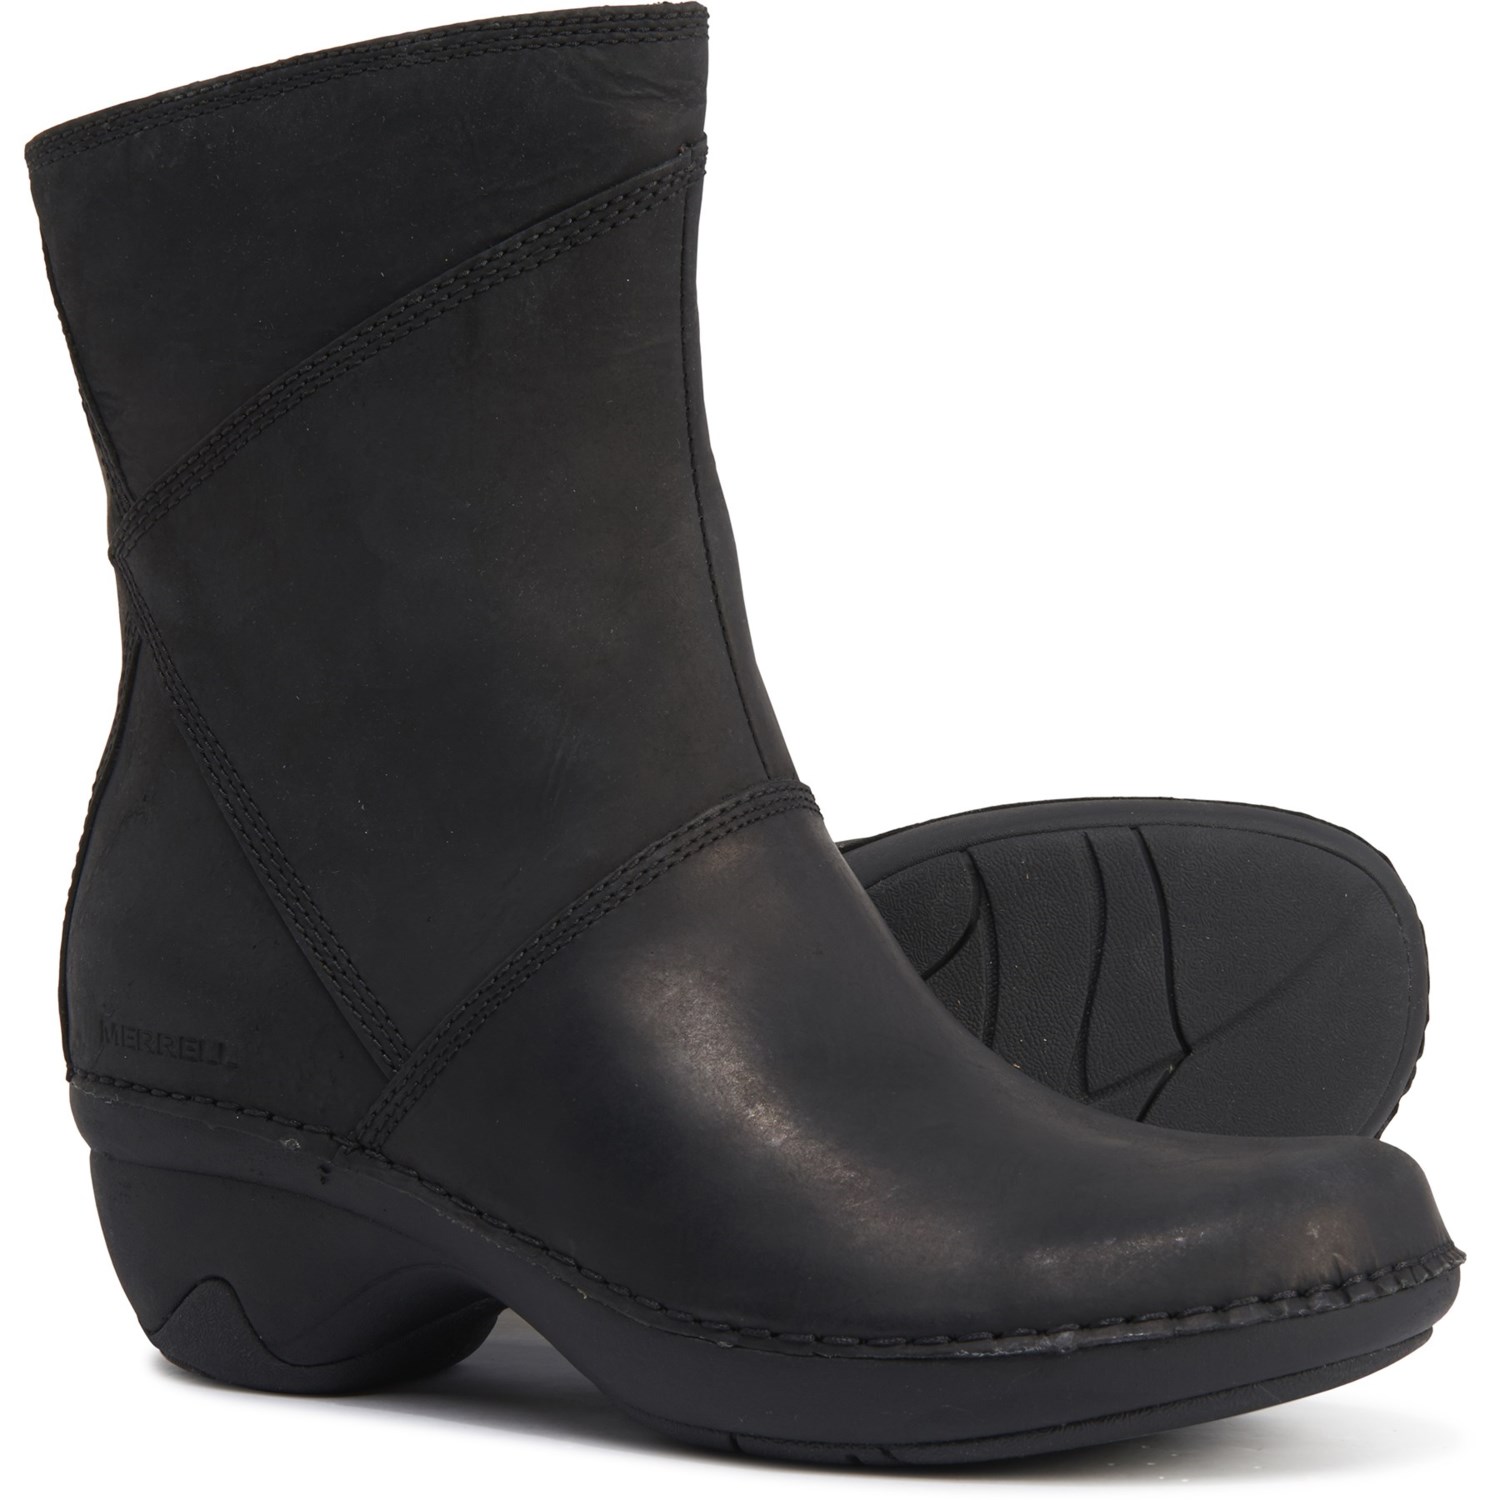 merrell black boots womens